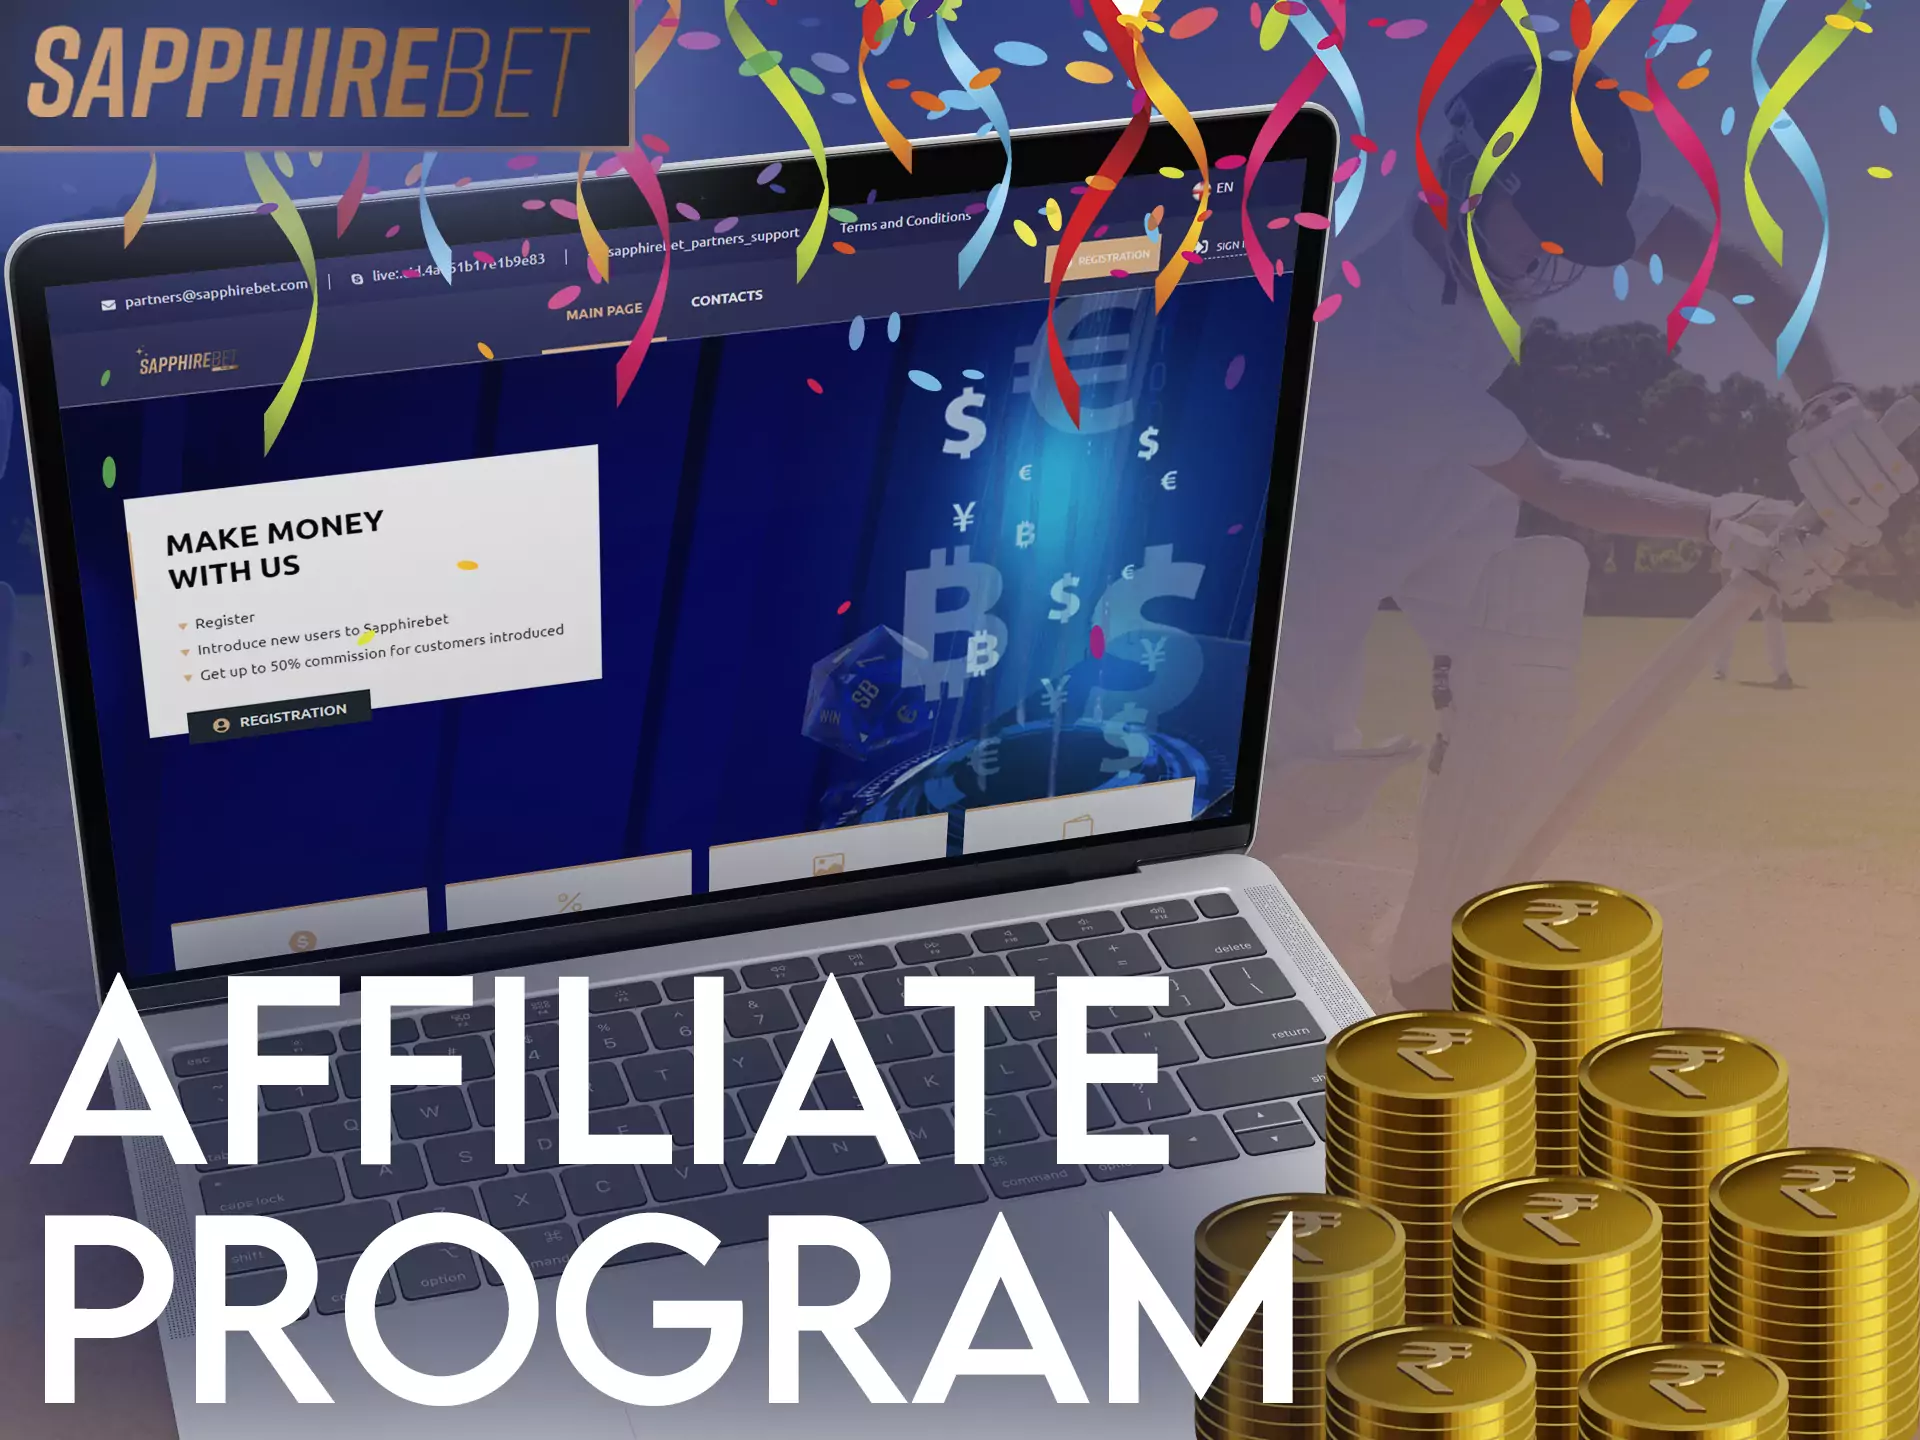 Join the Sapphirebet affiliate program and get nice bonuses.